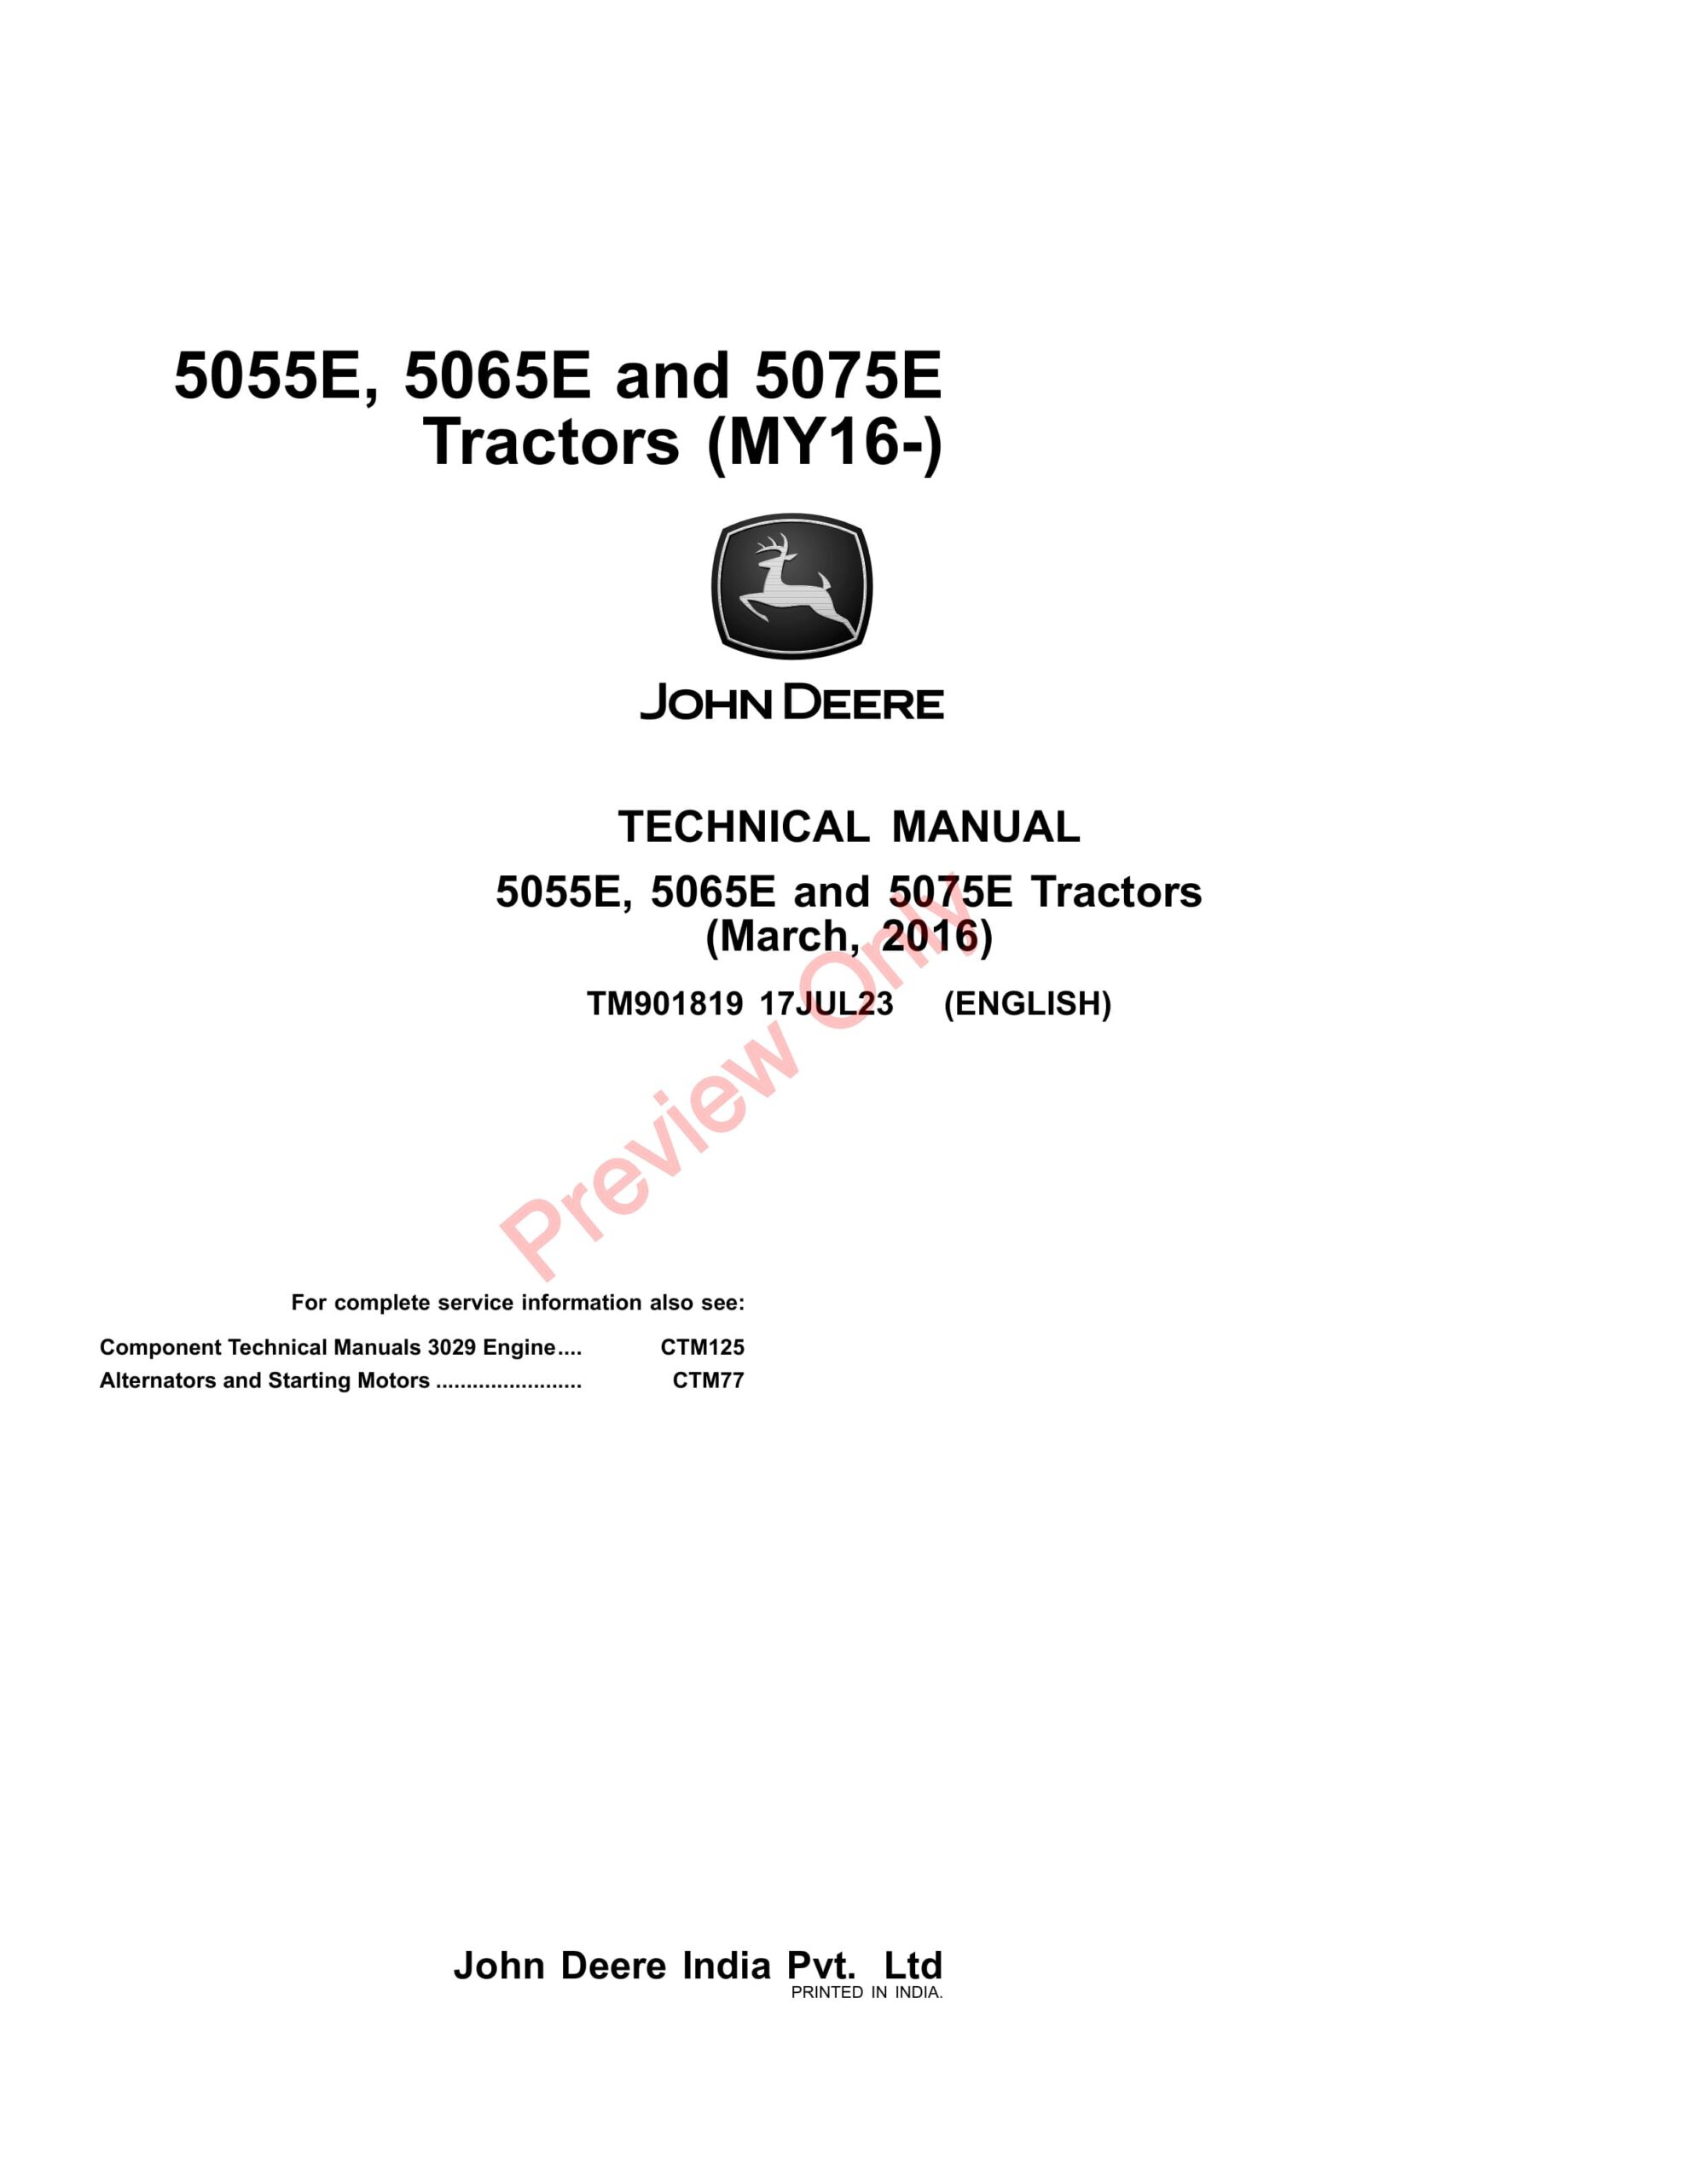 John Deere 5310E, 5055E, 5065E and 5075E Tractors Technical Manual TM901819 17JUL23-1